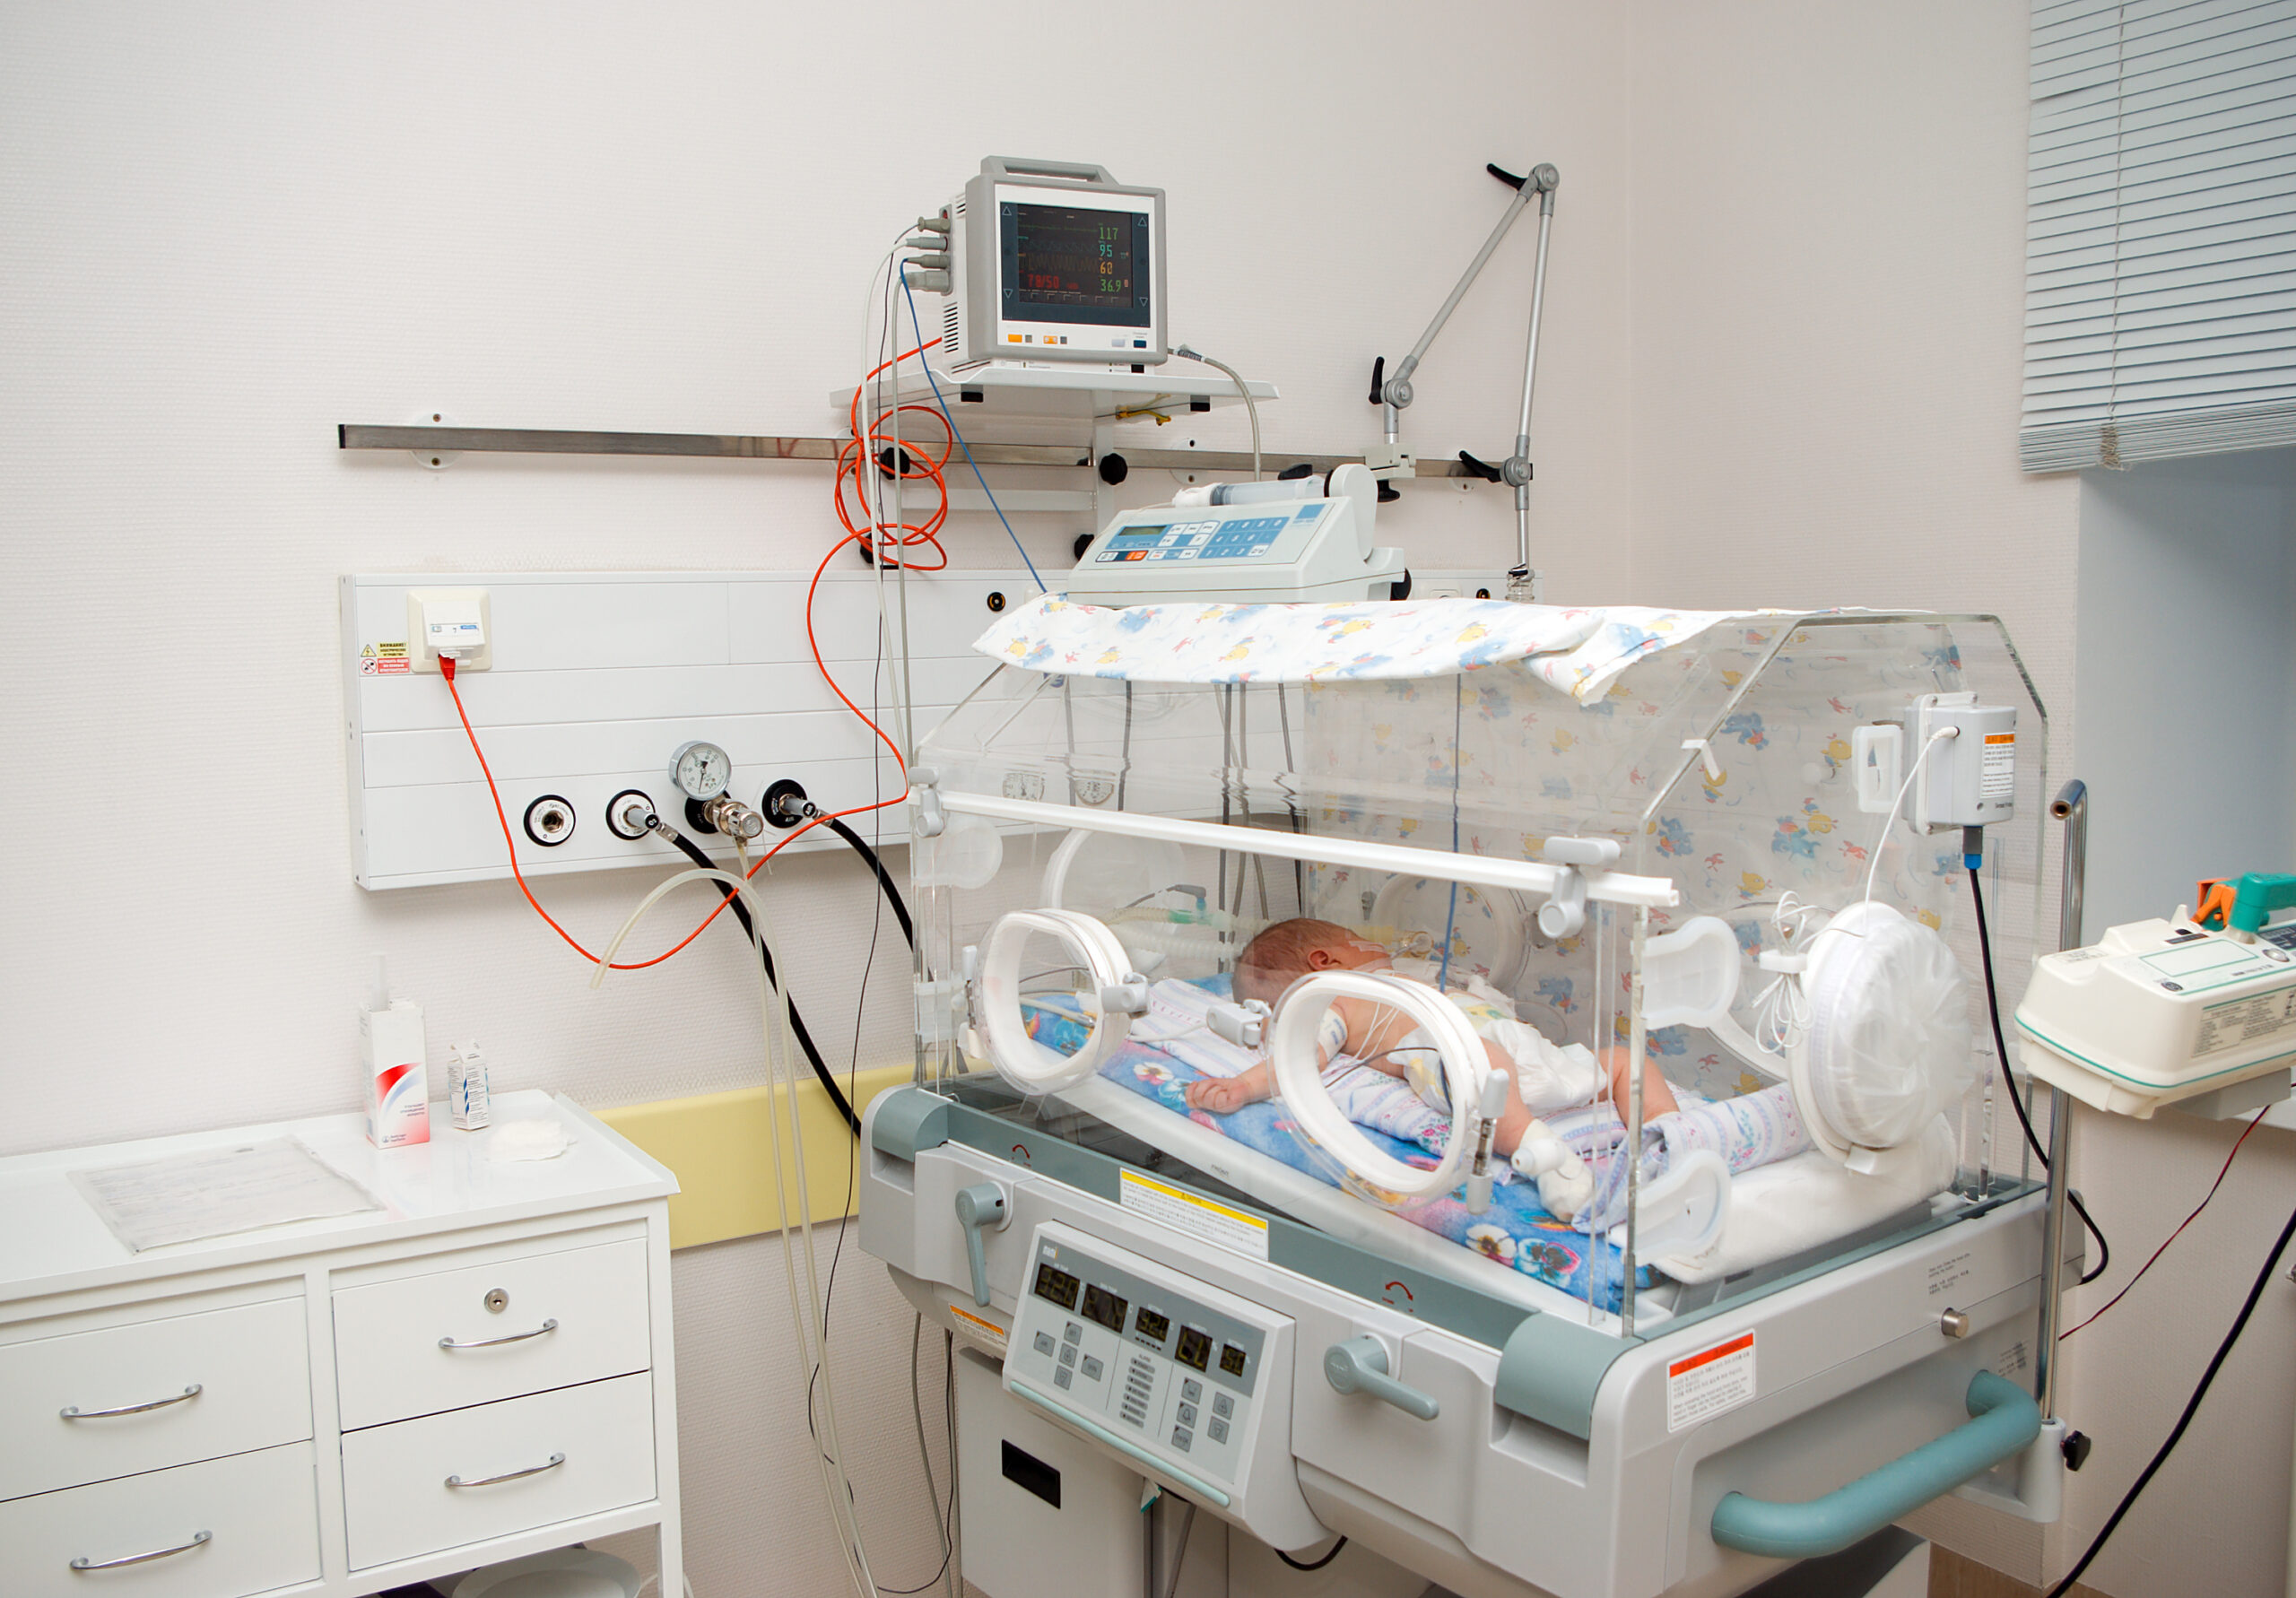 newborn baby sleeping in an incubator in hospital.